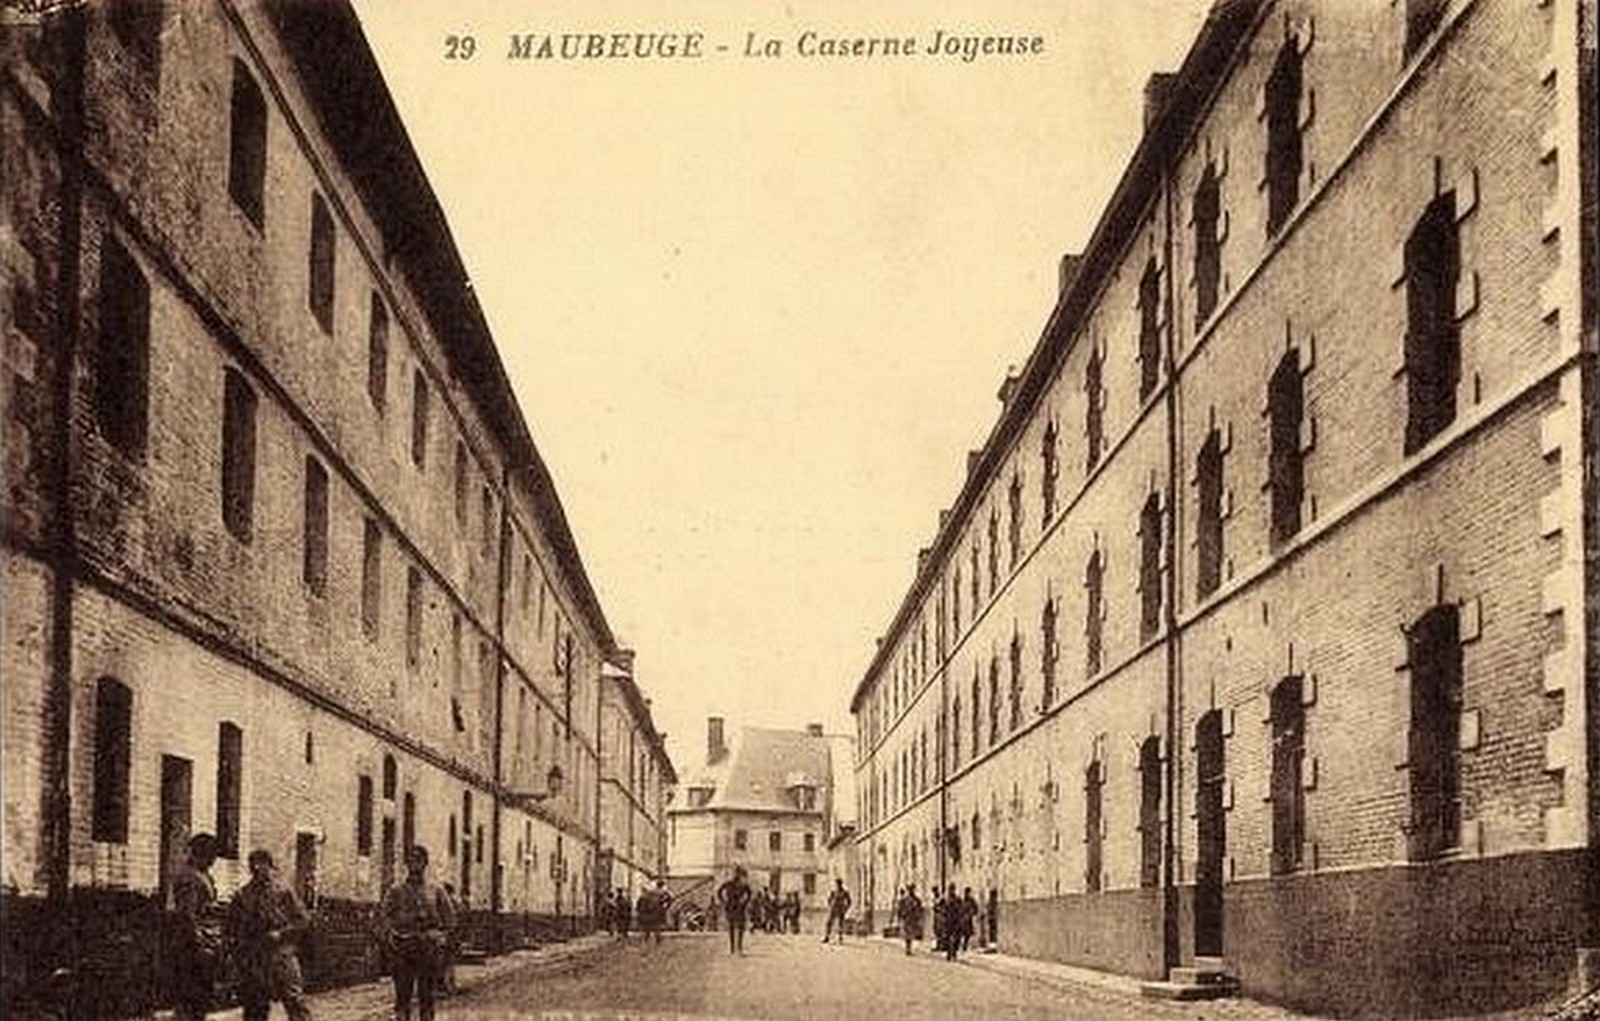 Cartes postales de Maubeuge, L'Esplanade et les Casernes Joyeuse.